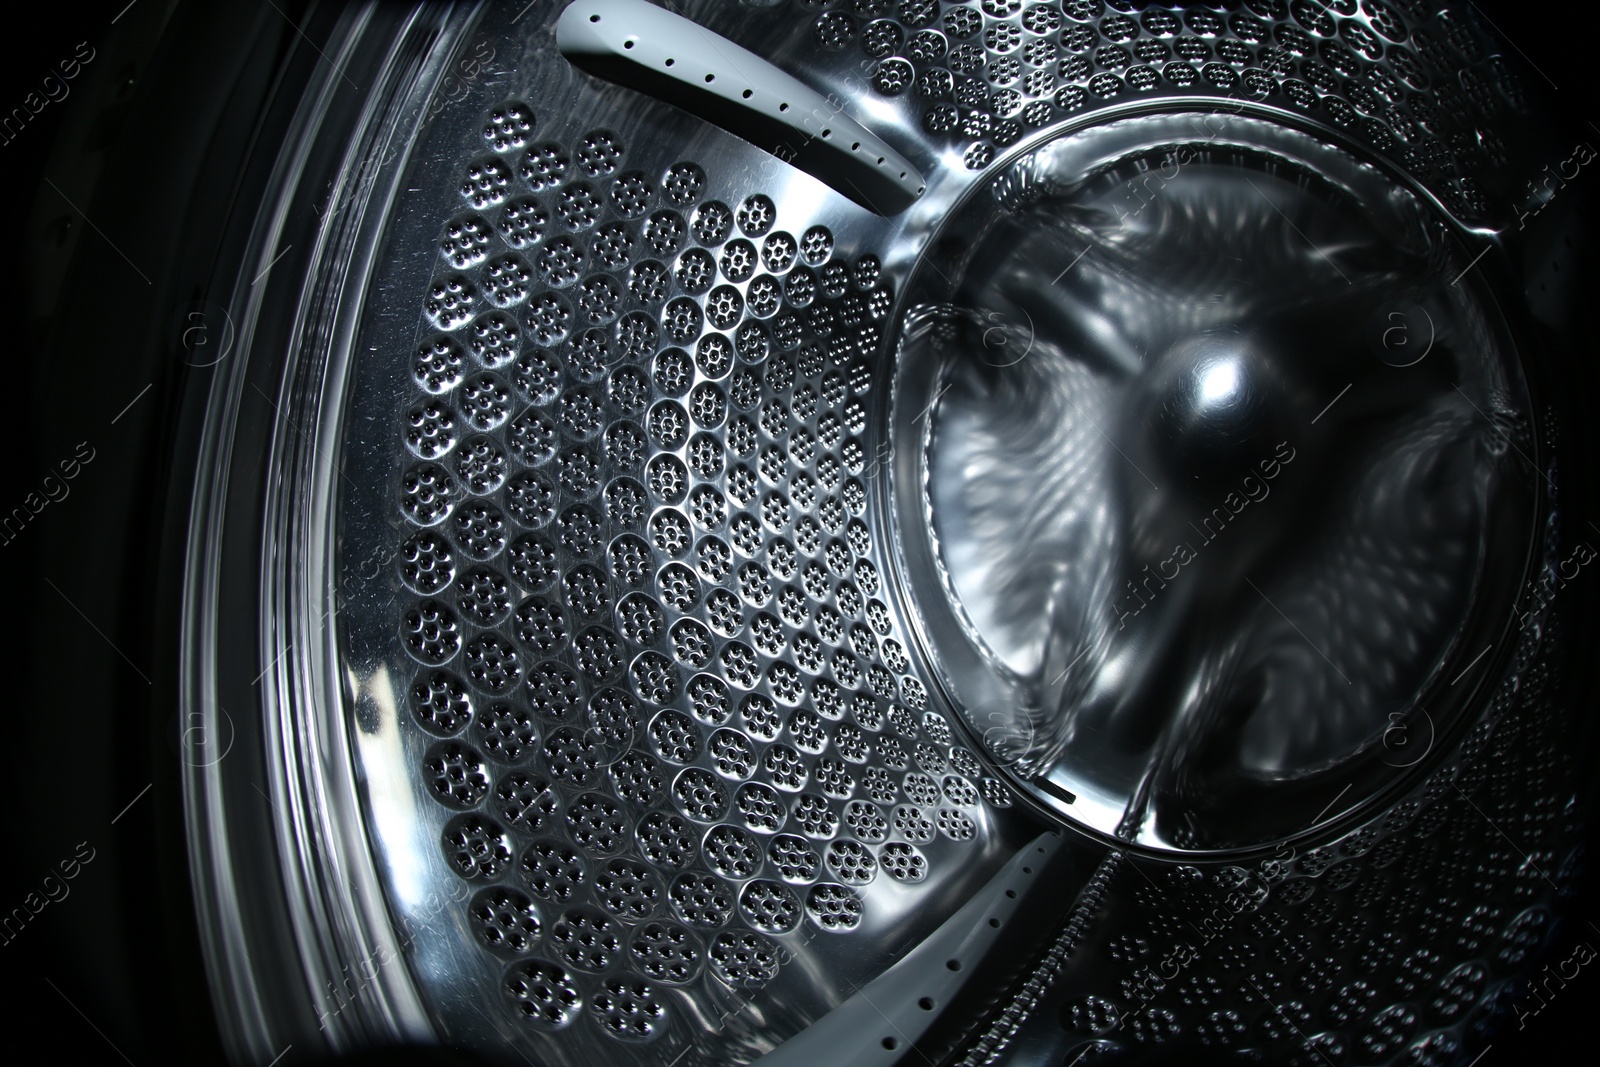 Photo of Empty washing machine drum, closeup. Laundry day